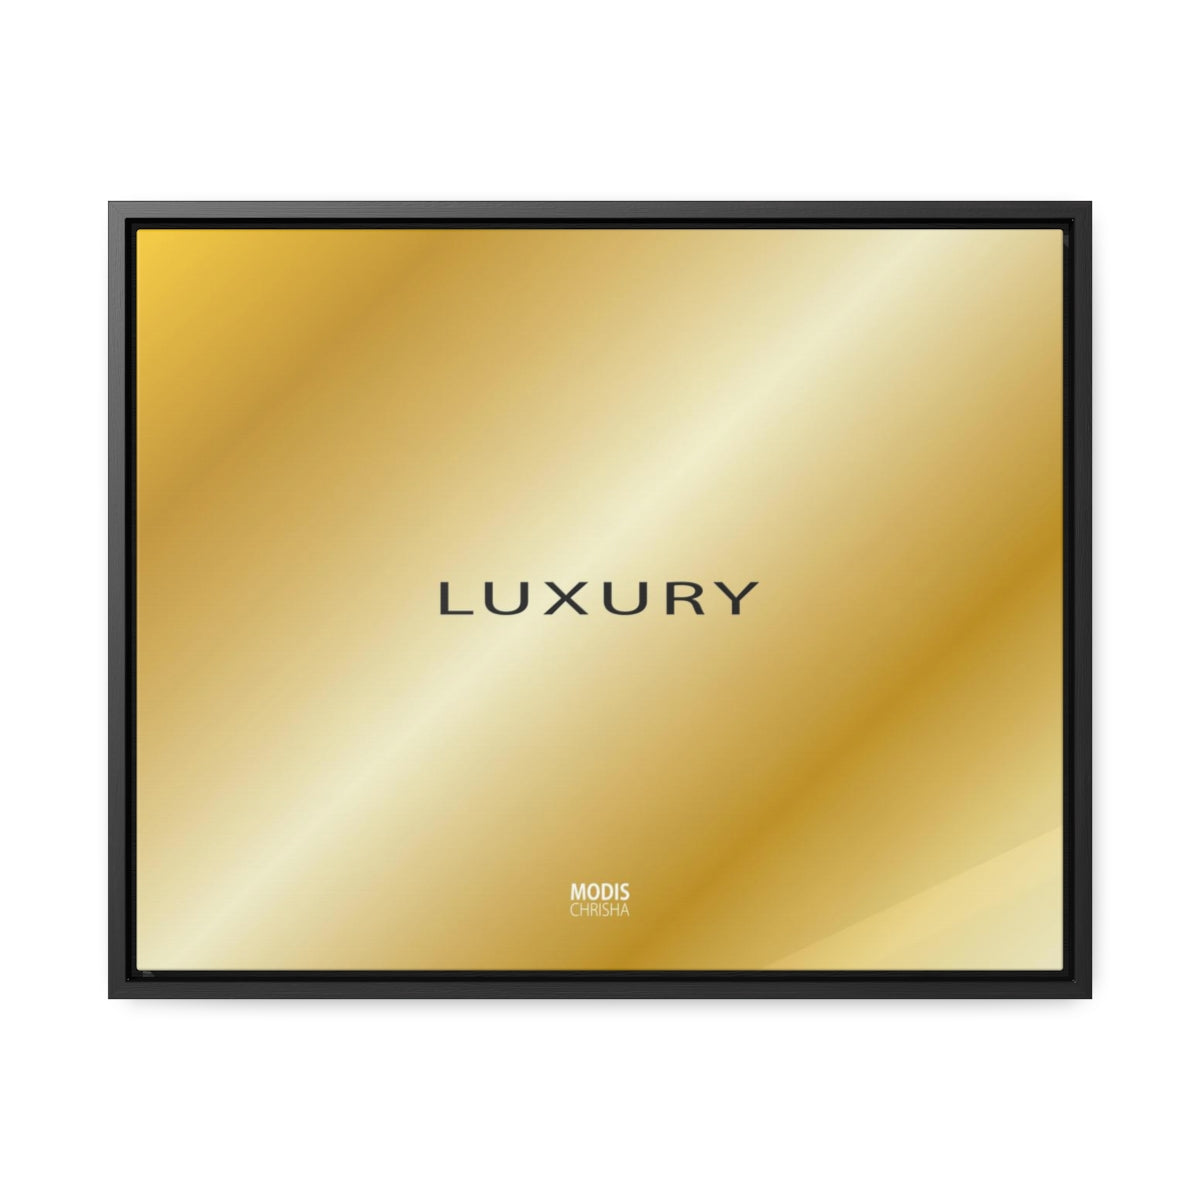 Canvas Gallery Wraps Frame Horizontal 20“ x 26“ - Design Luxury